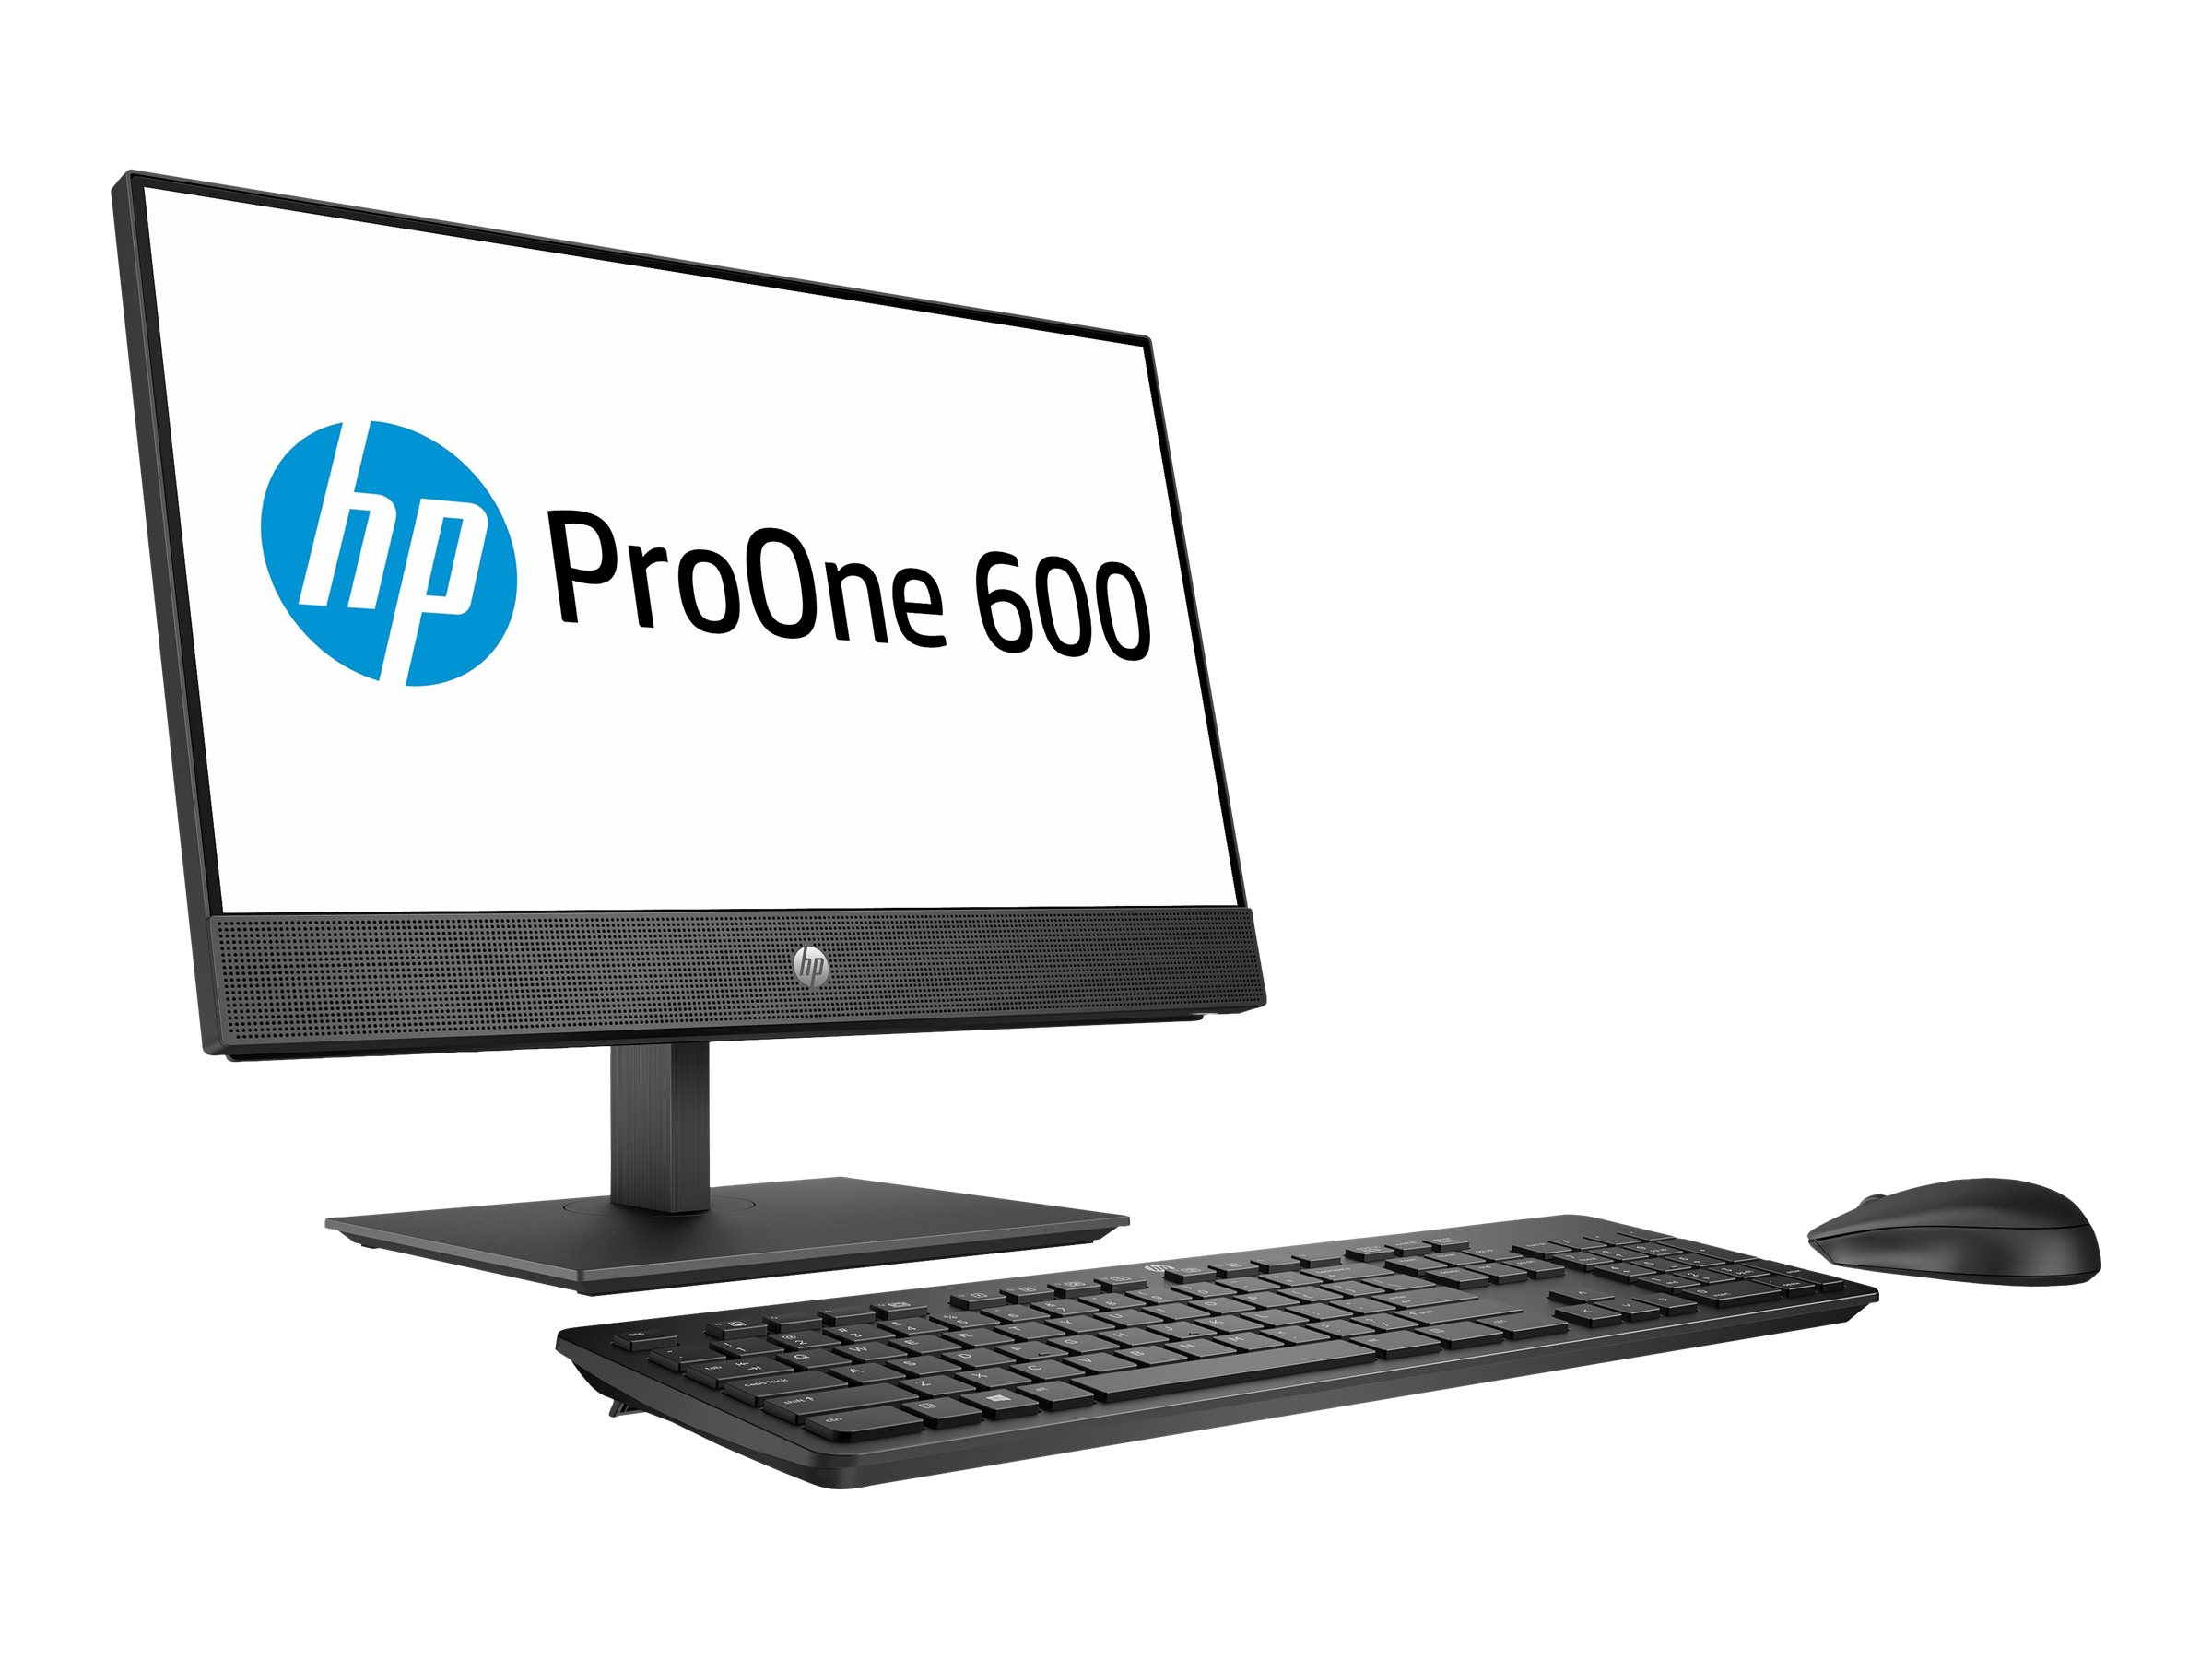 HP ProOne 600 G4 - All-in-one | www.shi.ca